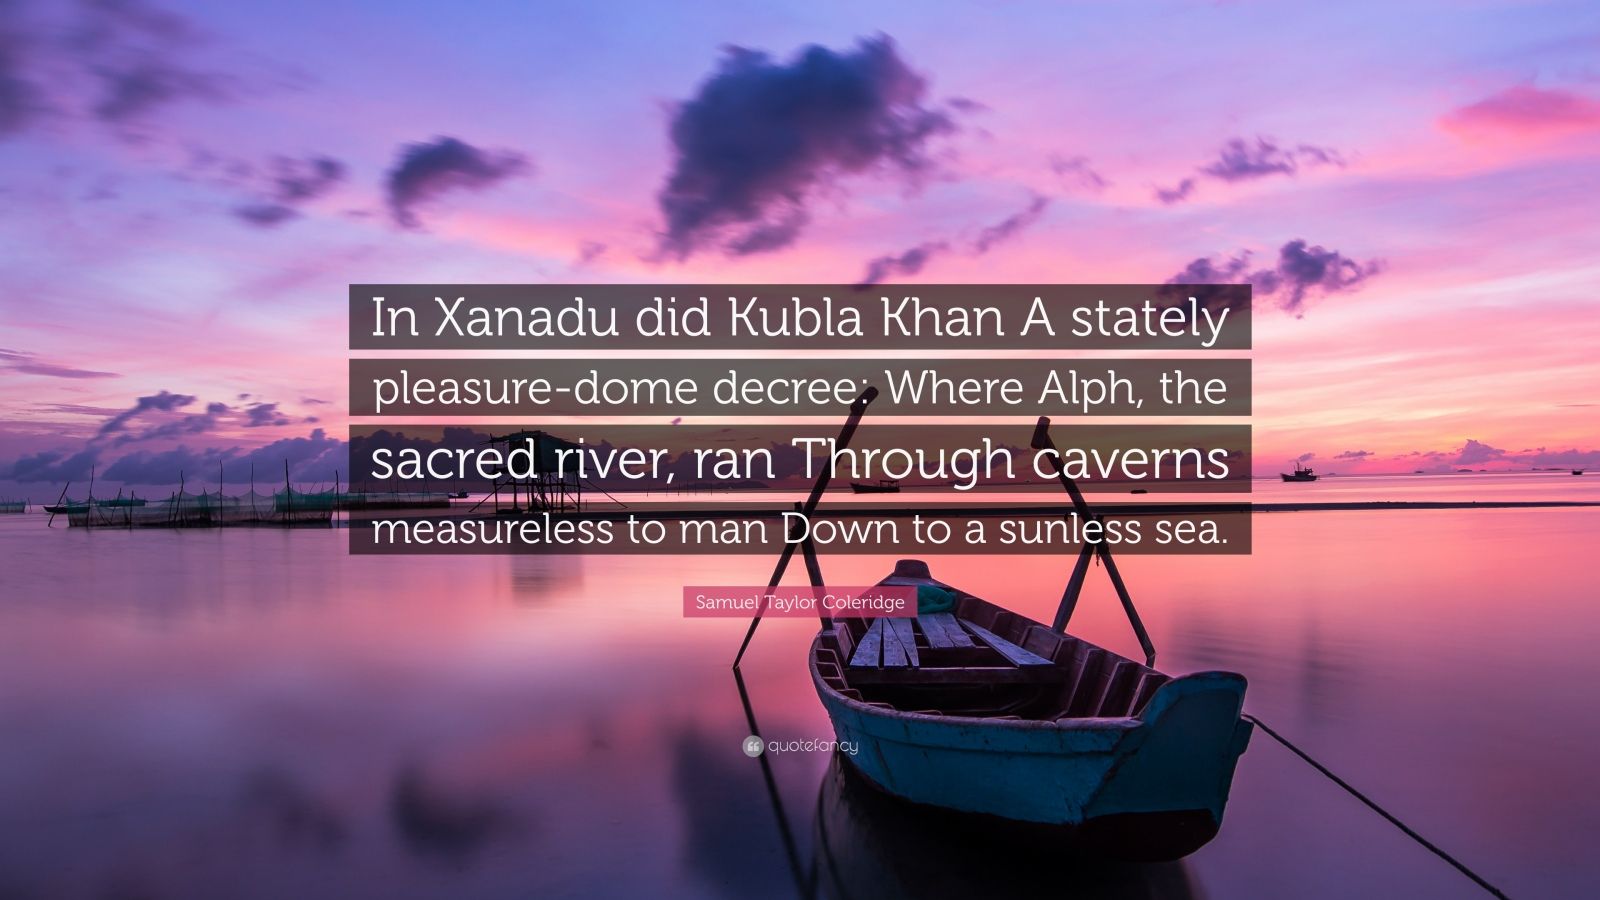 Samuel Taylor Coleridge Quote: “In Xanadu did Kubla Khan A stately pleasure-dome ...